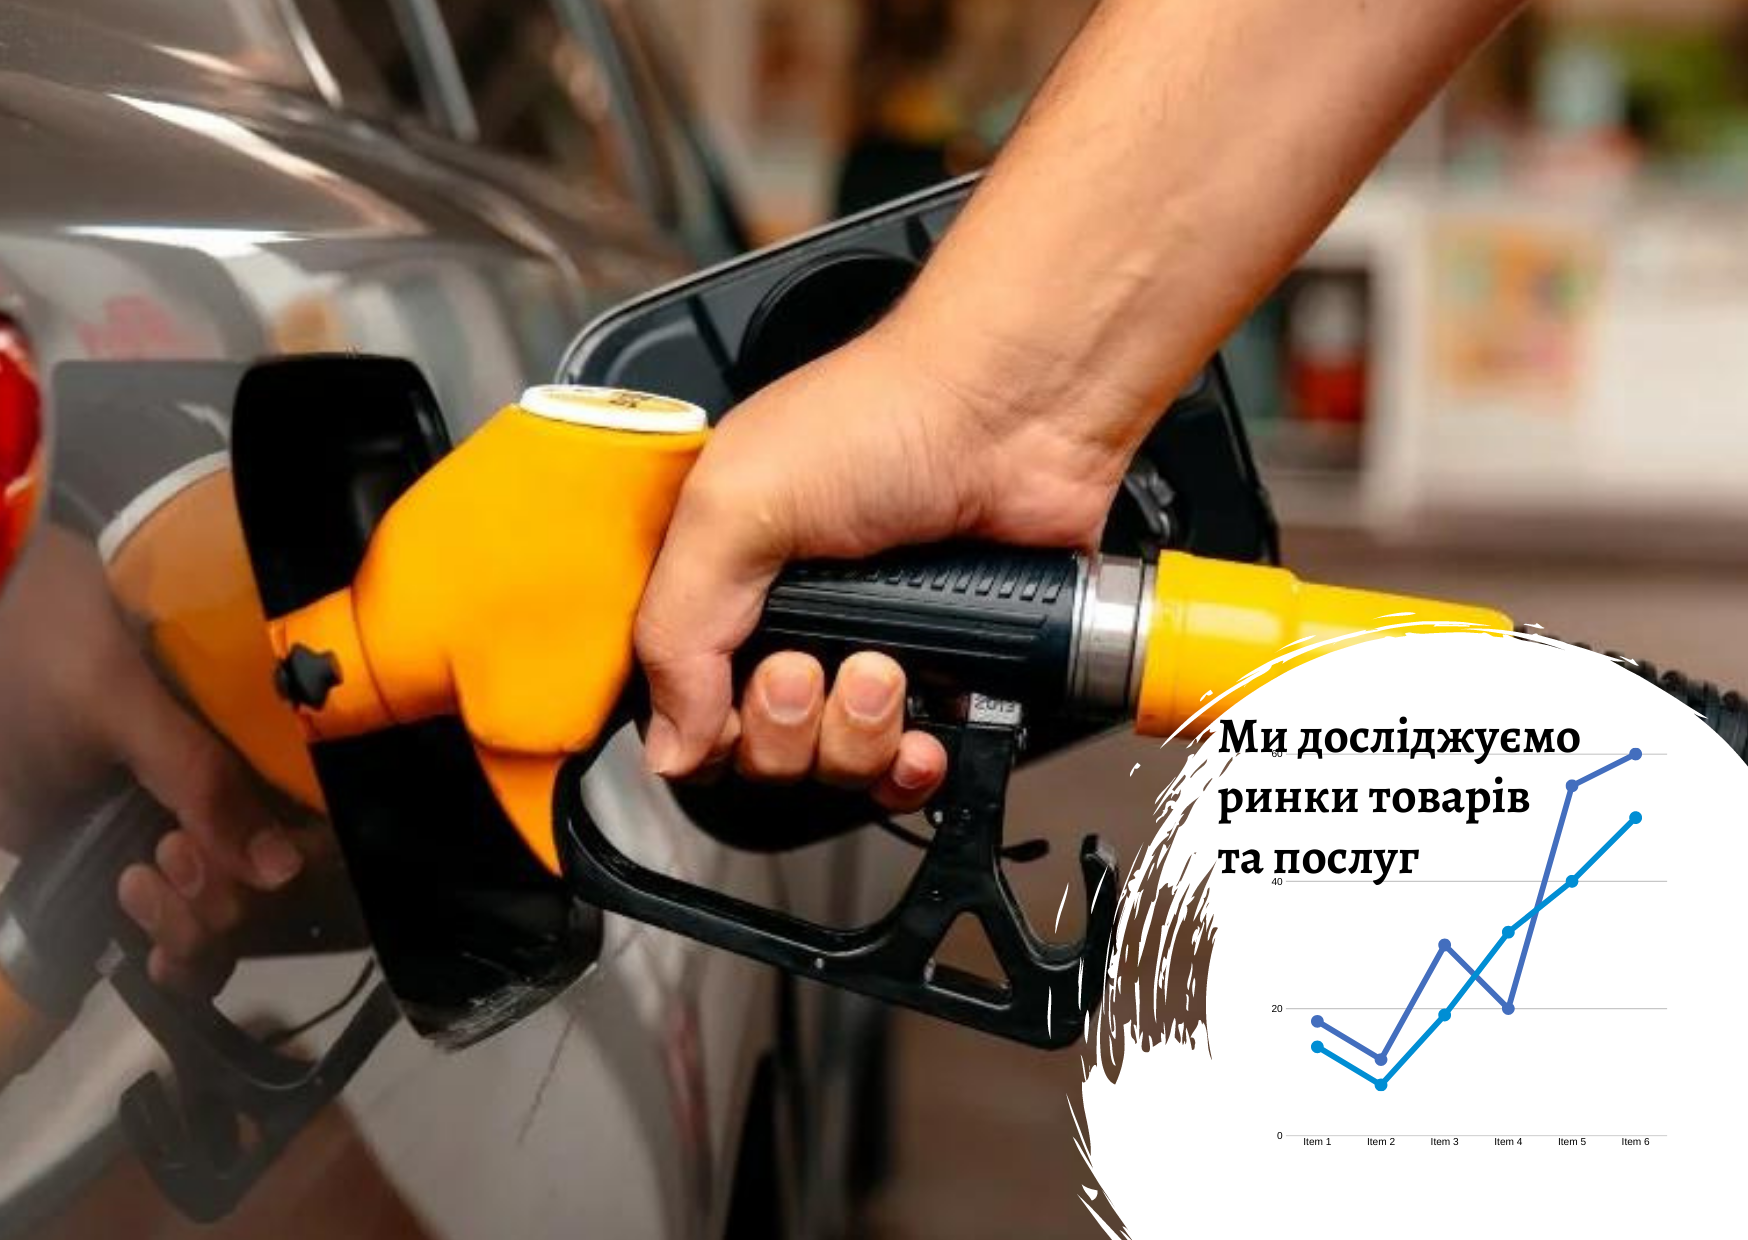 Ukrainian petroleum products market: consumer analysis